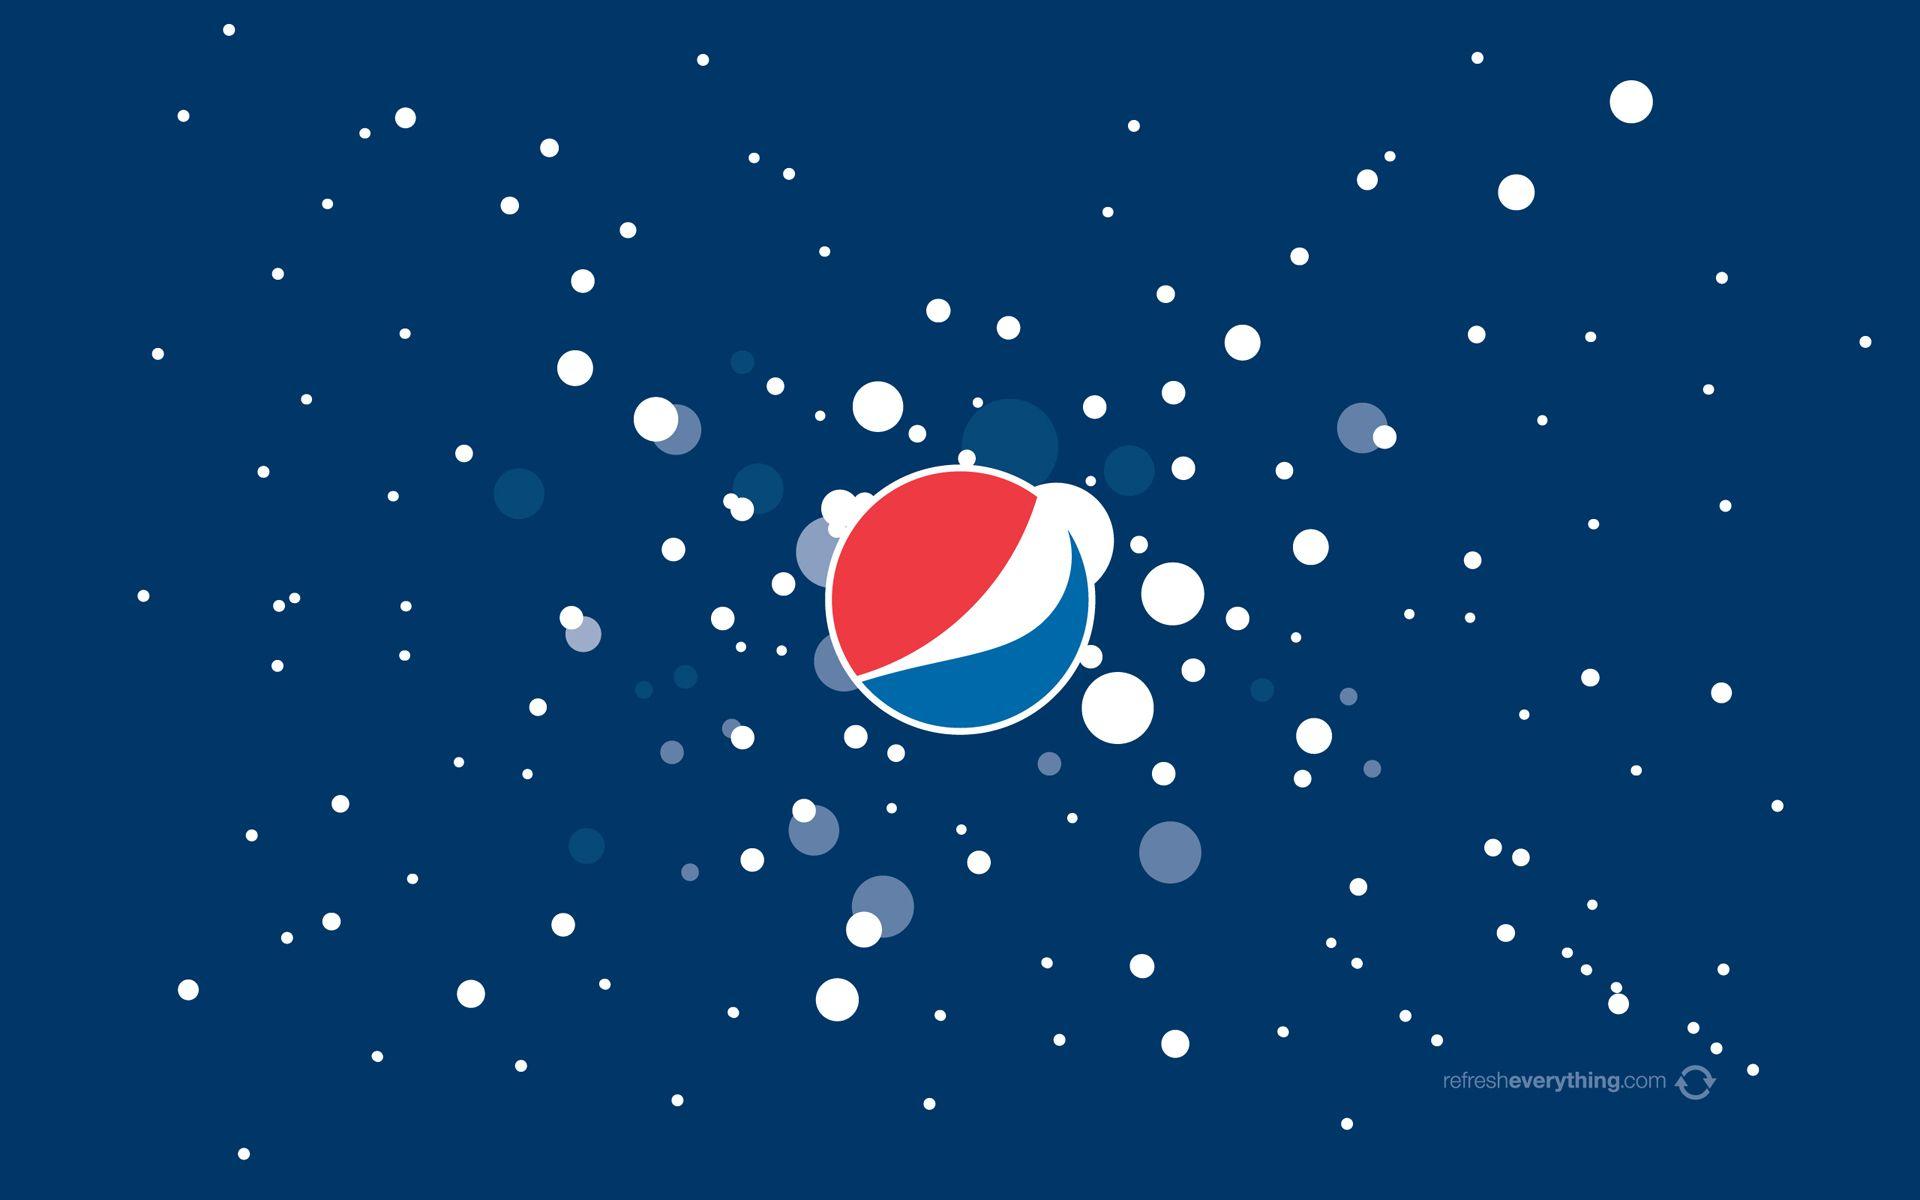 Pepsi Logo Wallpaper